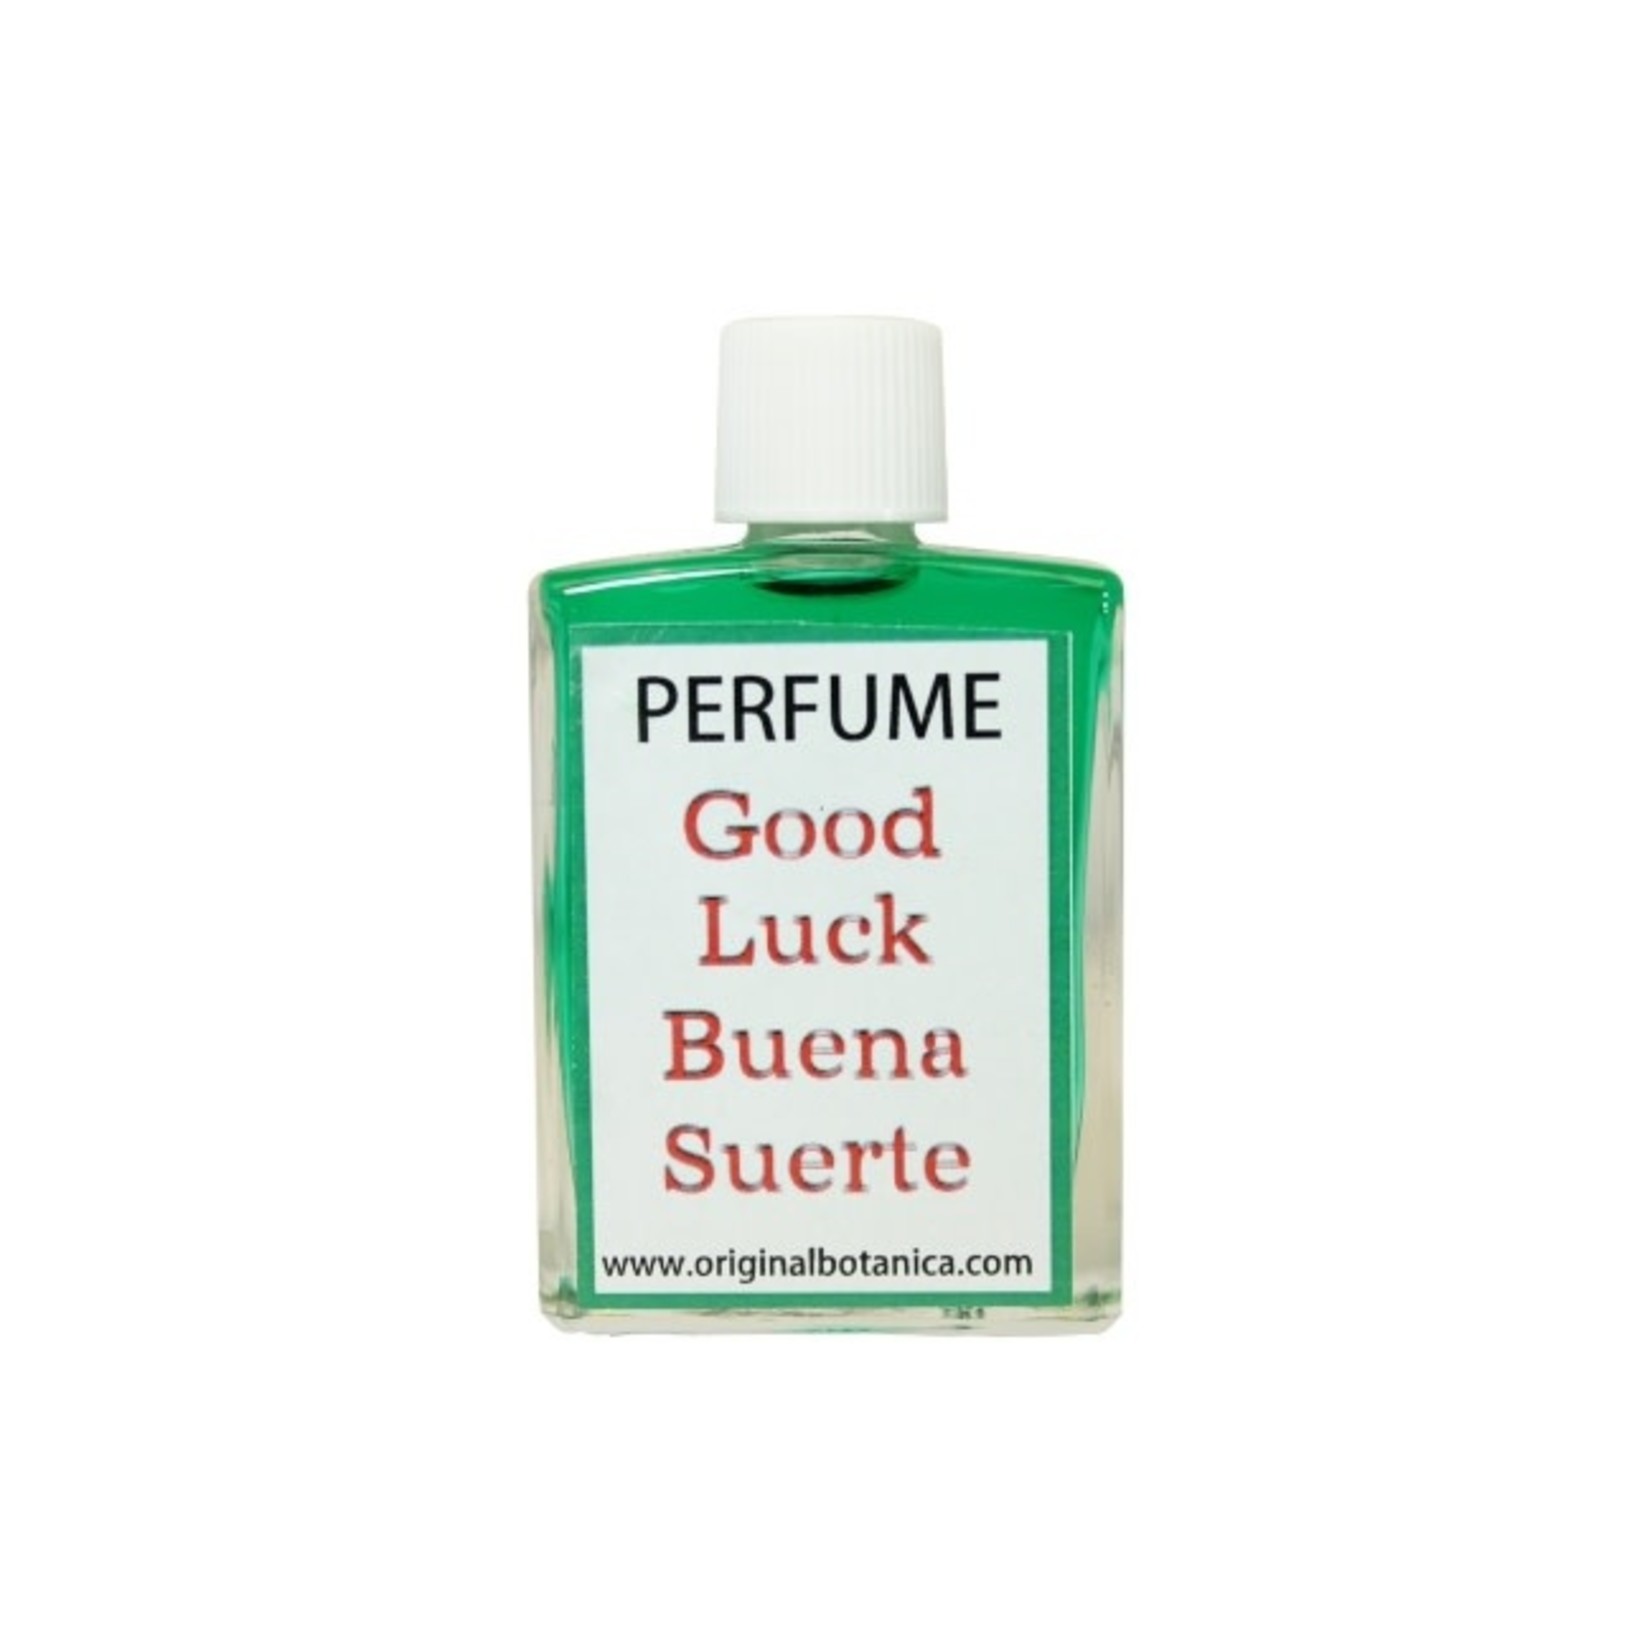 Good Luck - Buena Suerte Perfume